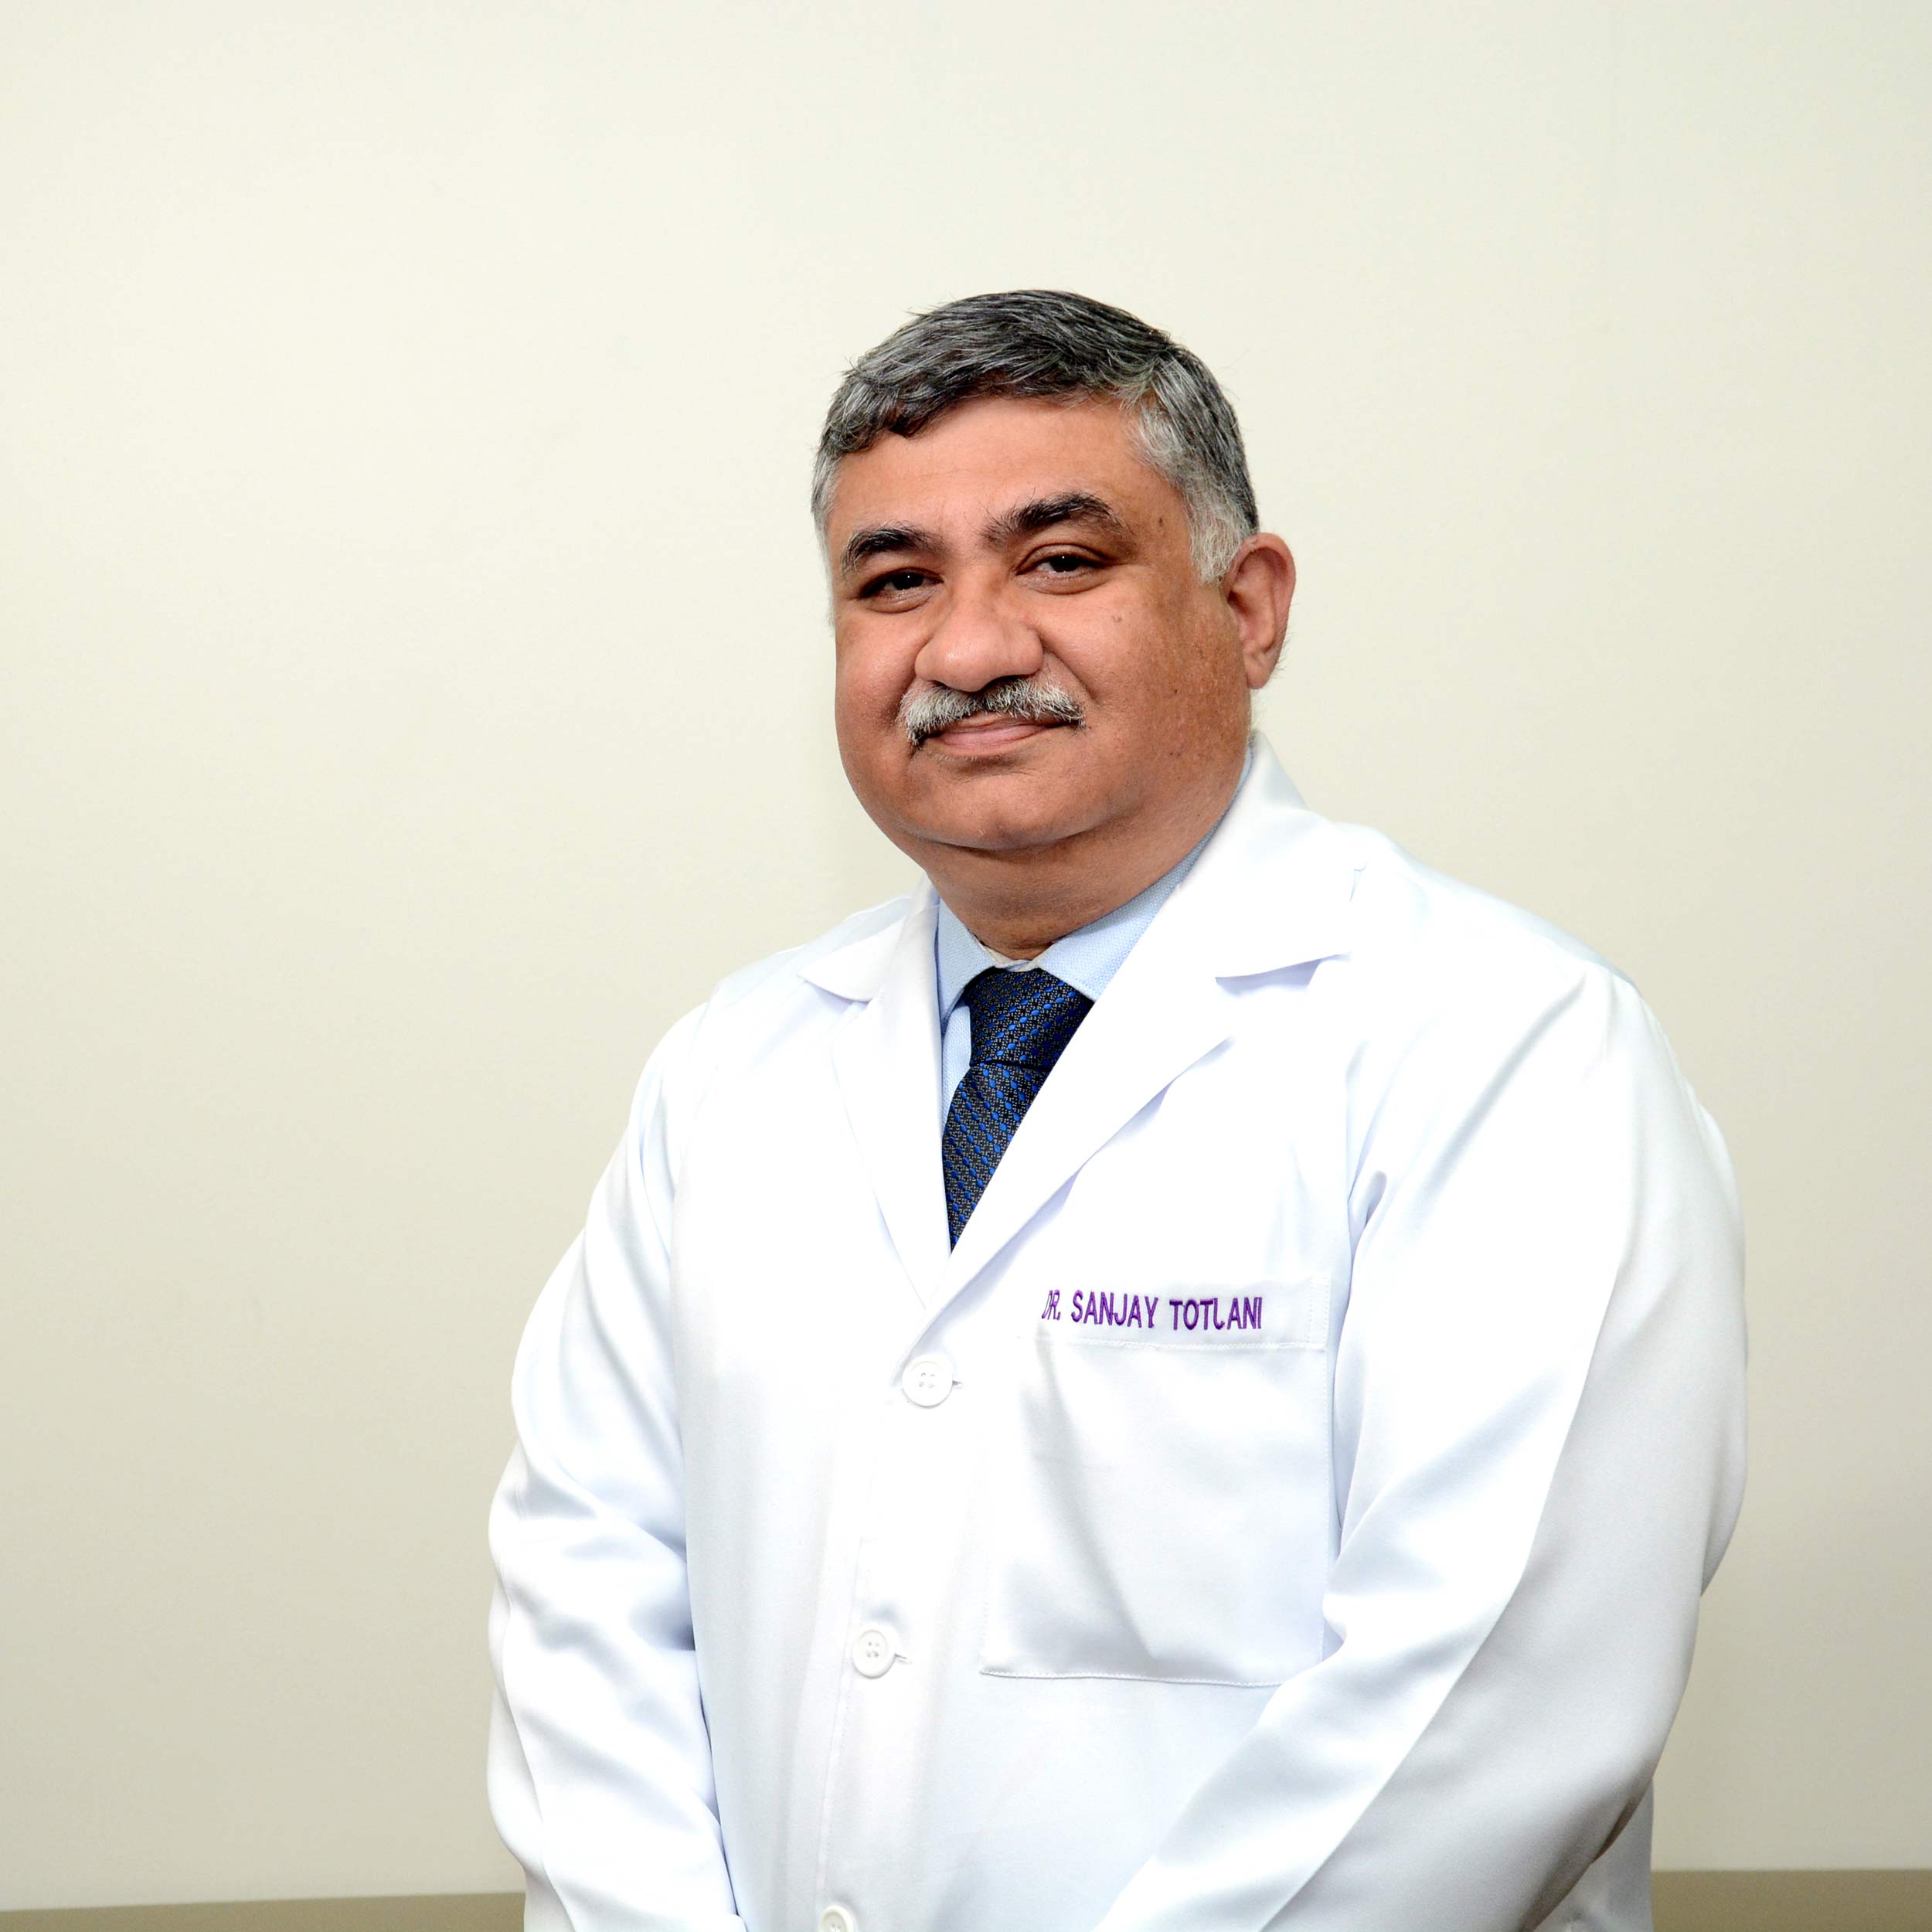 Dr. Sanjay Totlani's picture